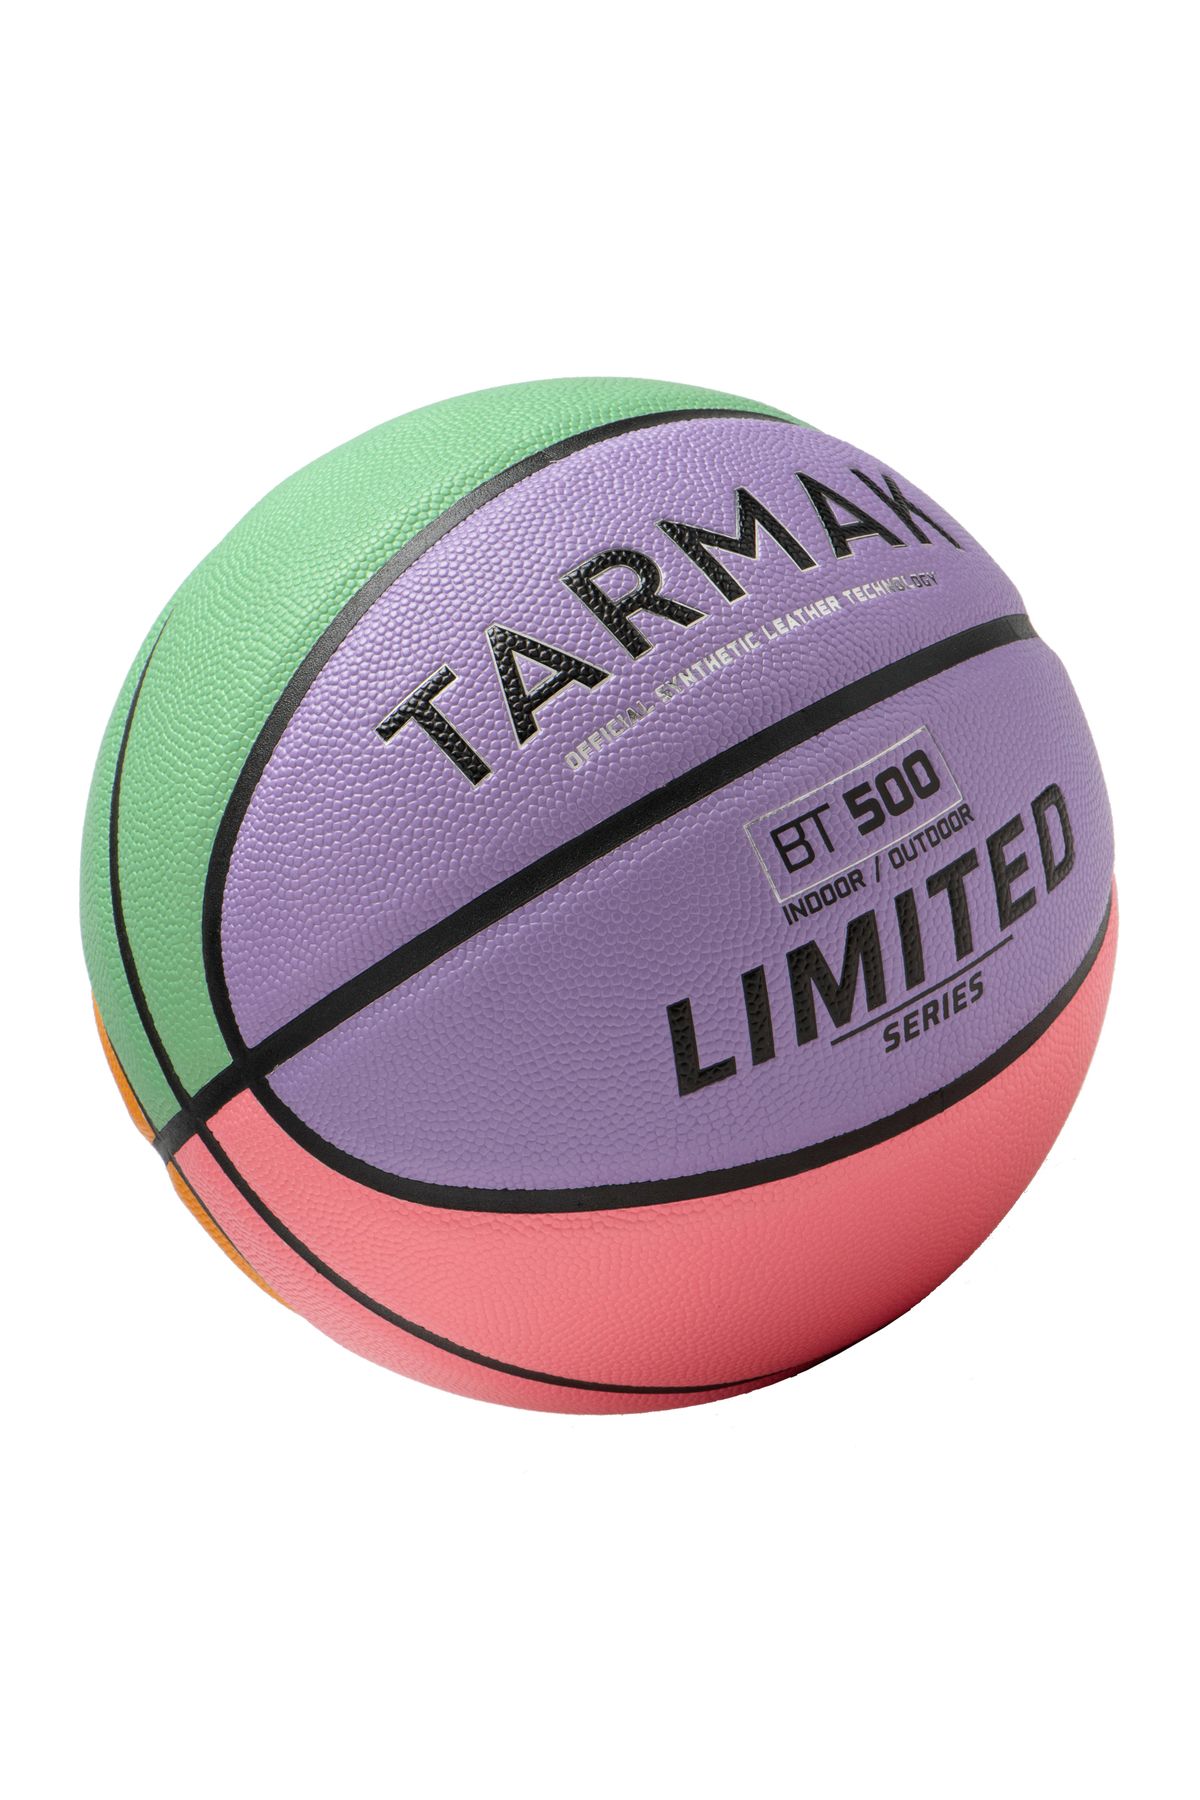 Decathlon Basketbol Topu - 7 Numara - Mor / Yeşil - BT500 Touch Limited Series